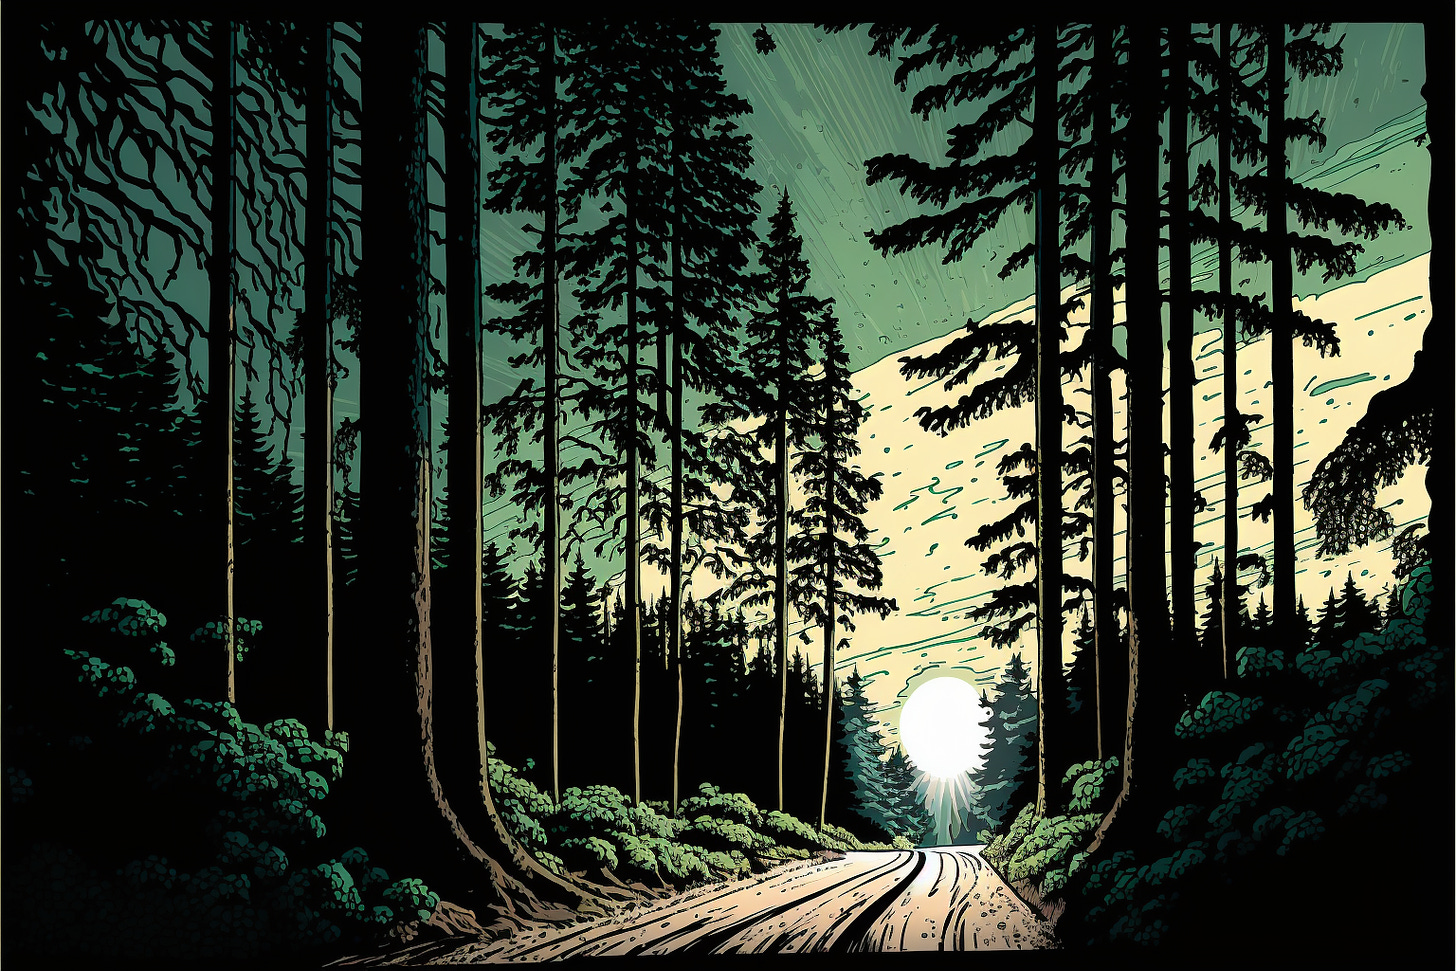 a road through tall pine trees, graphic novel